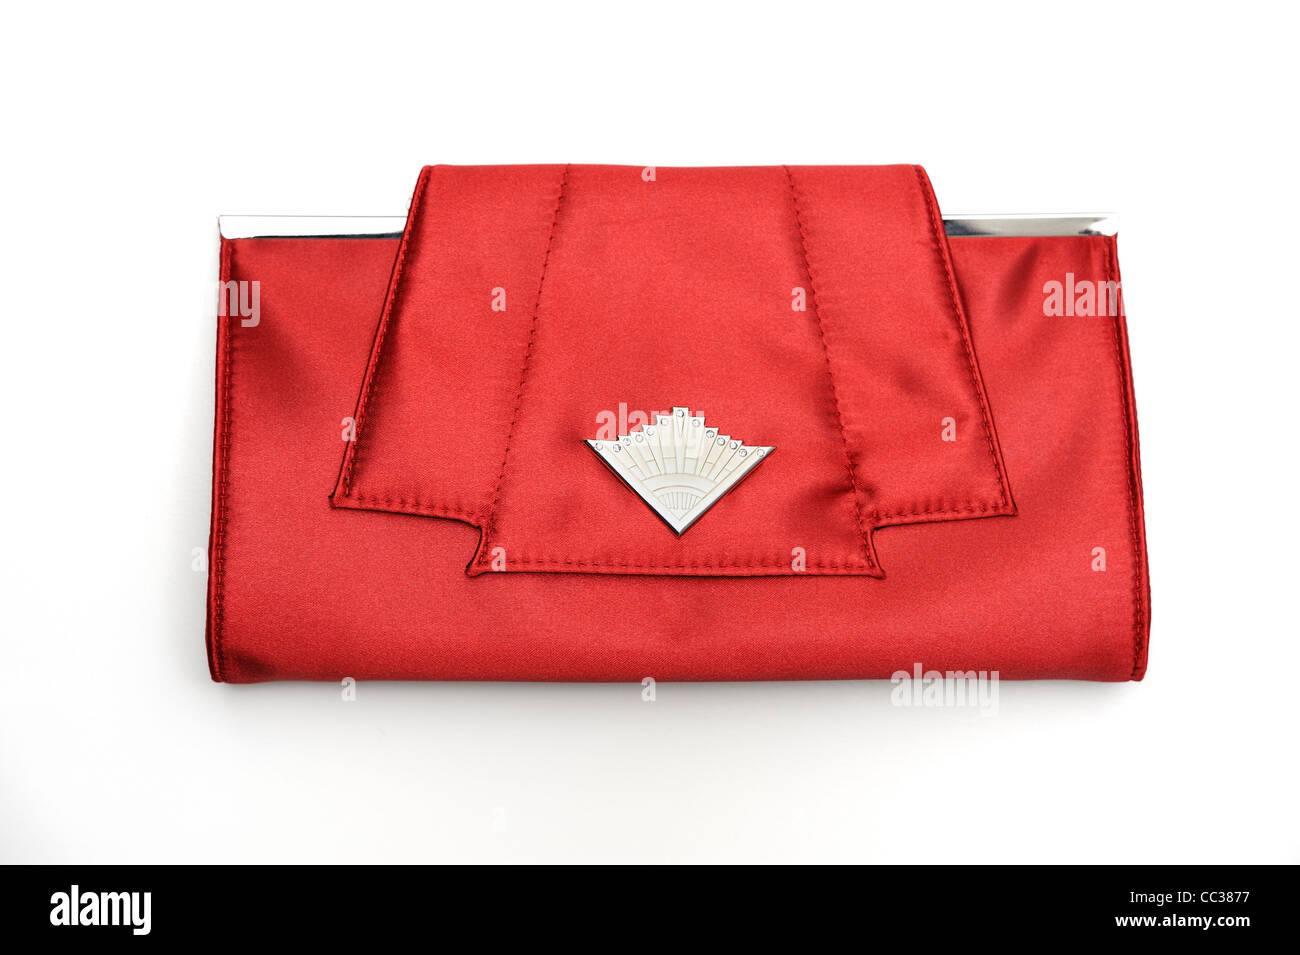 Tactile sense Blur Counterpart GHD red clutch bag england uk Stock Photo - Alamy